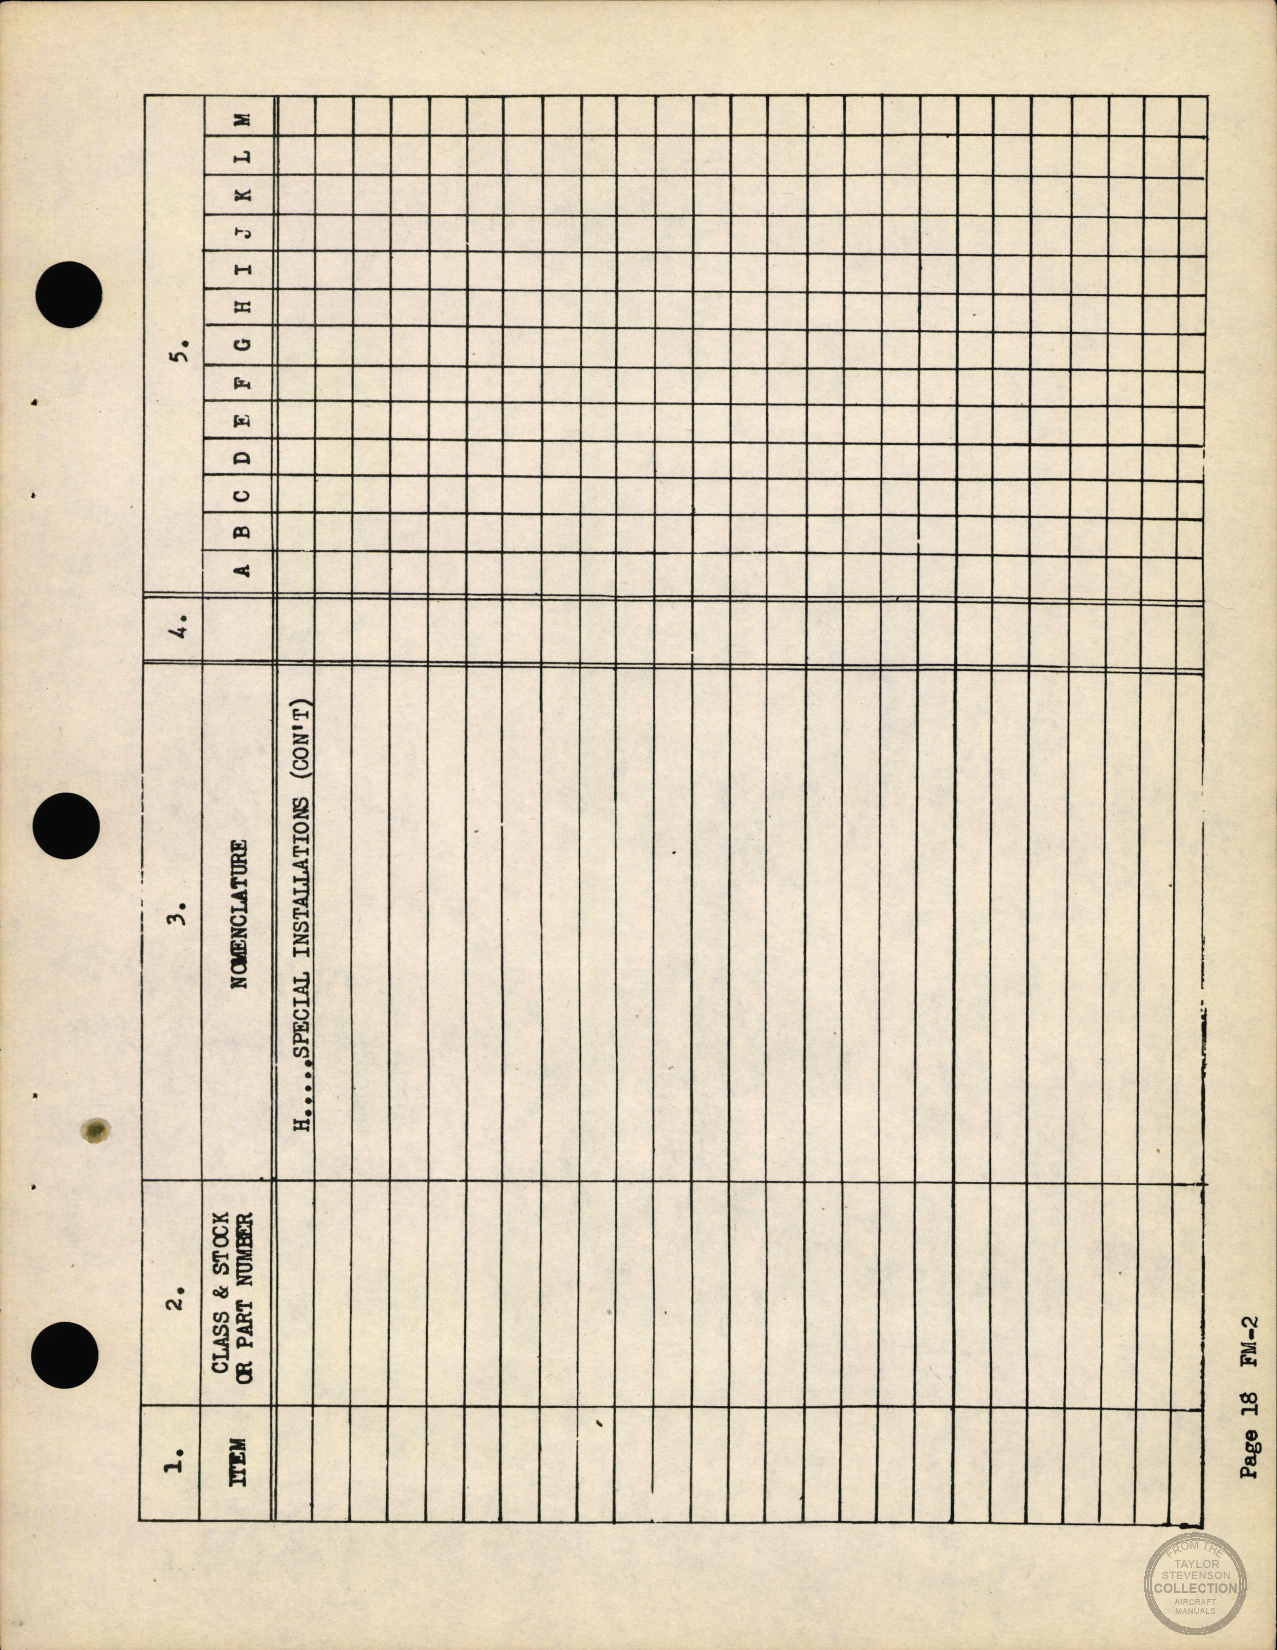 Sample page 23 from AirCorps Library document: Bureau of Aeronautics Standard Inventory Log set (2), FM-2 Wildcat